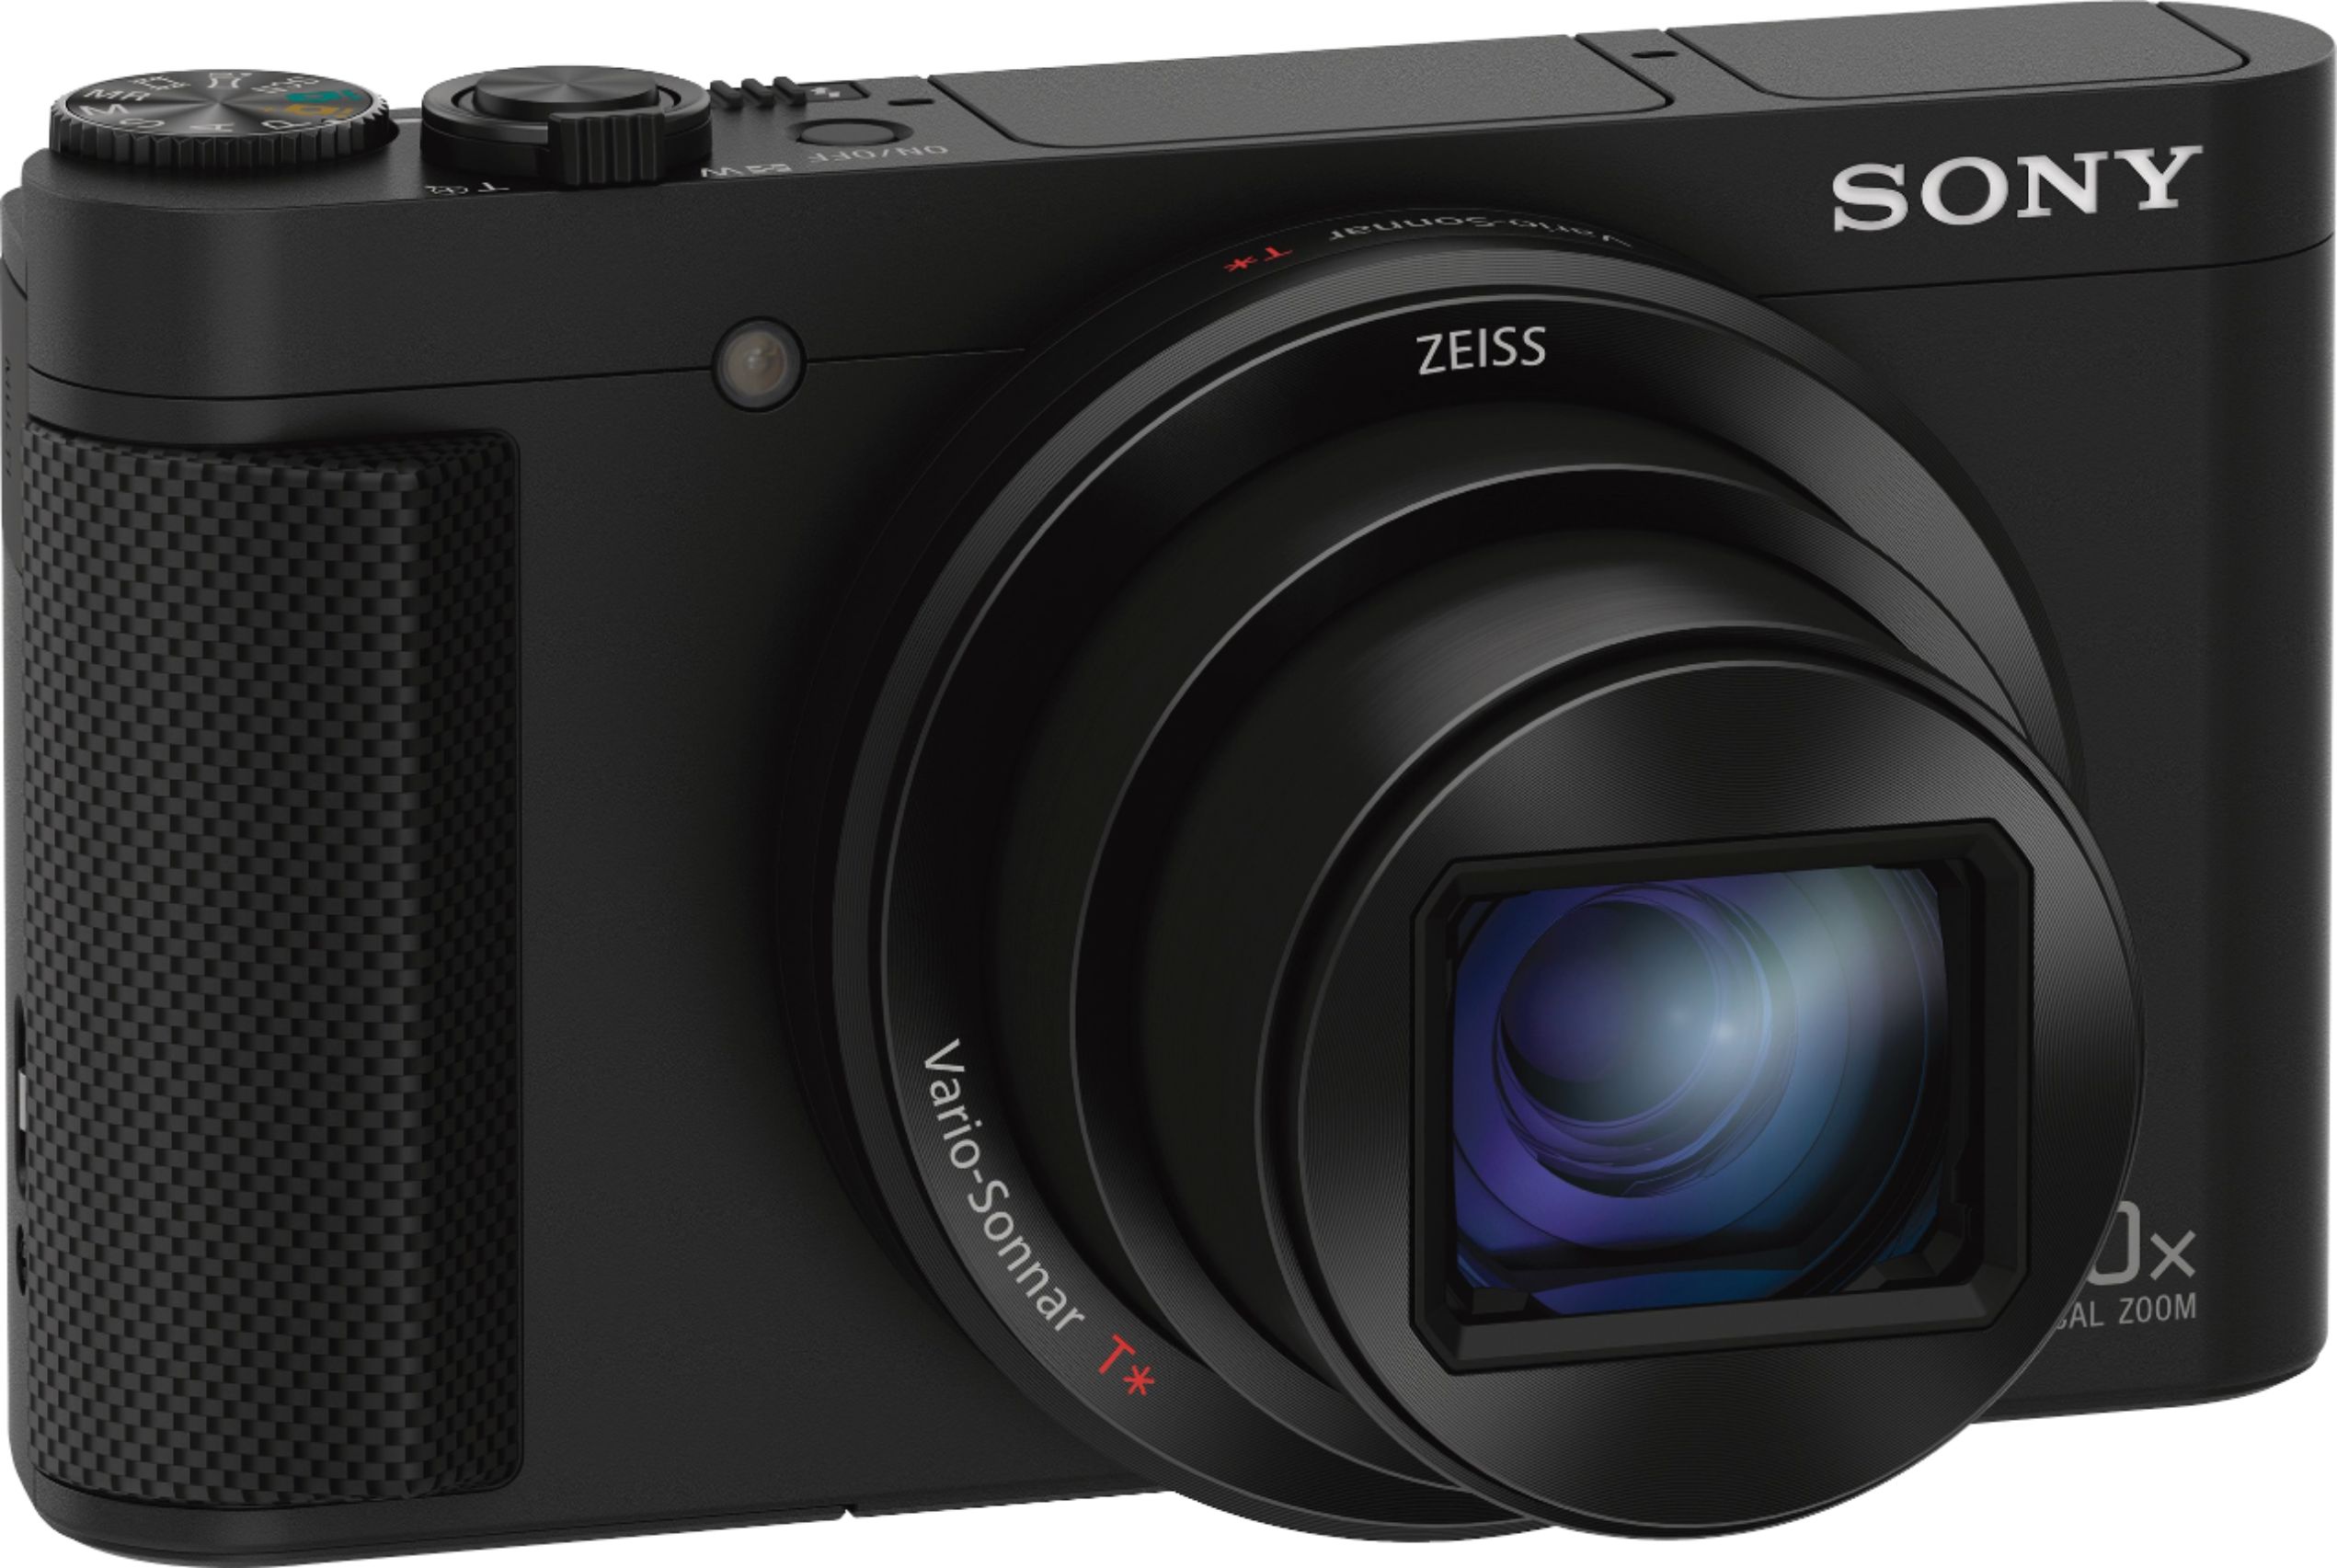 Angle View: Sony - Cyber-shot DSC-HX80 18.2-Megapixel Digital Camera - Black